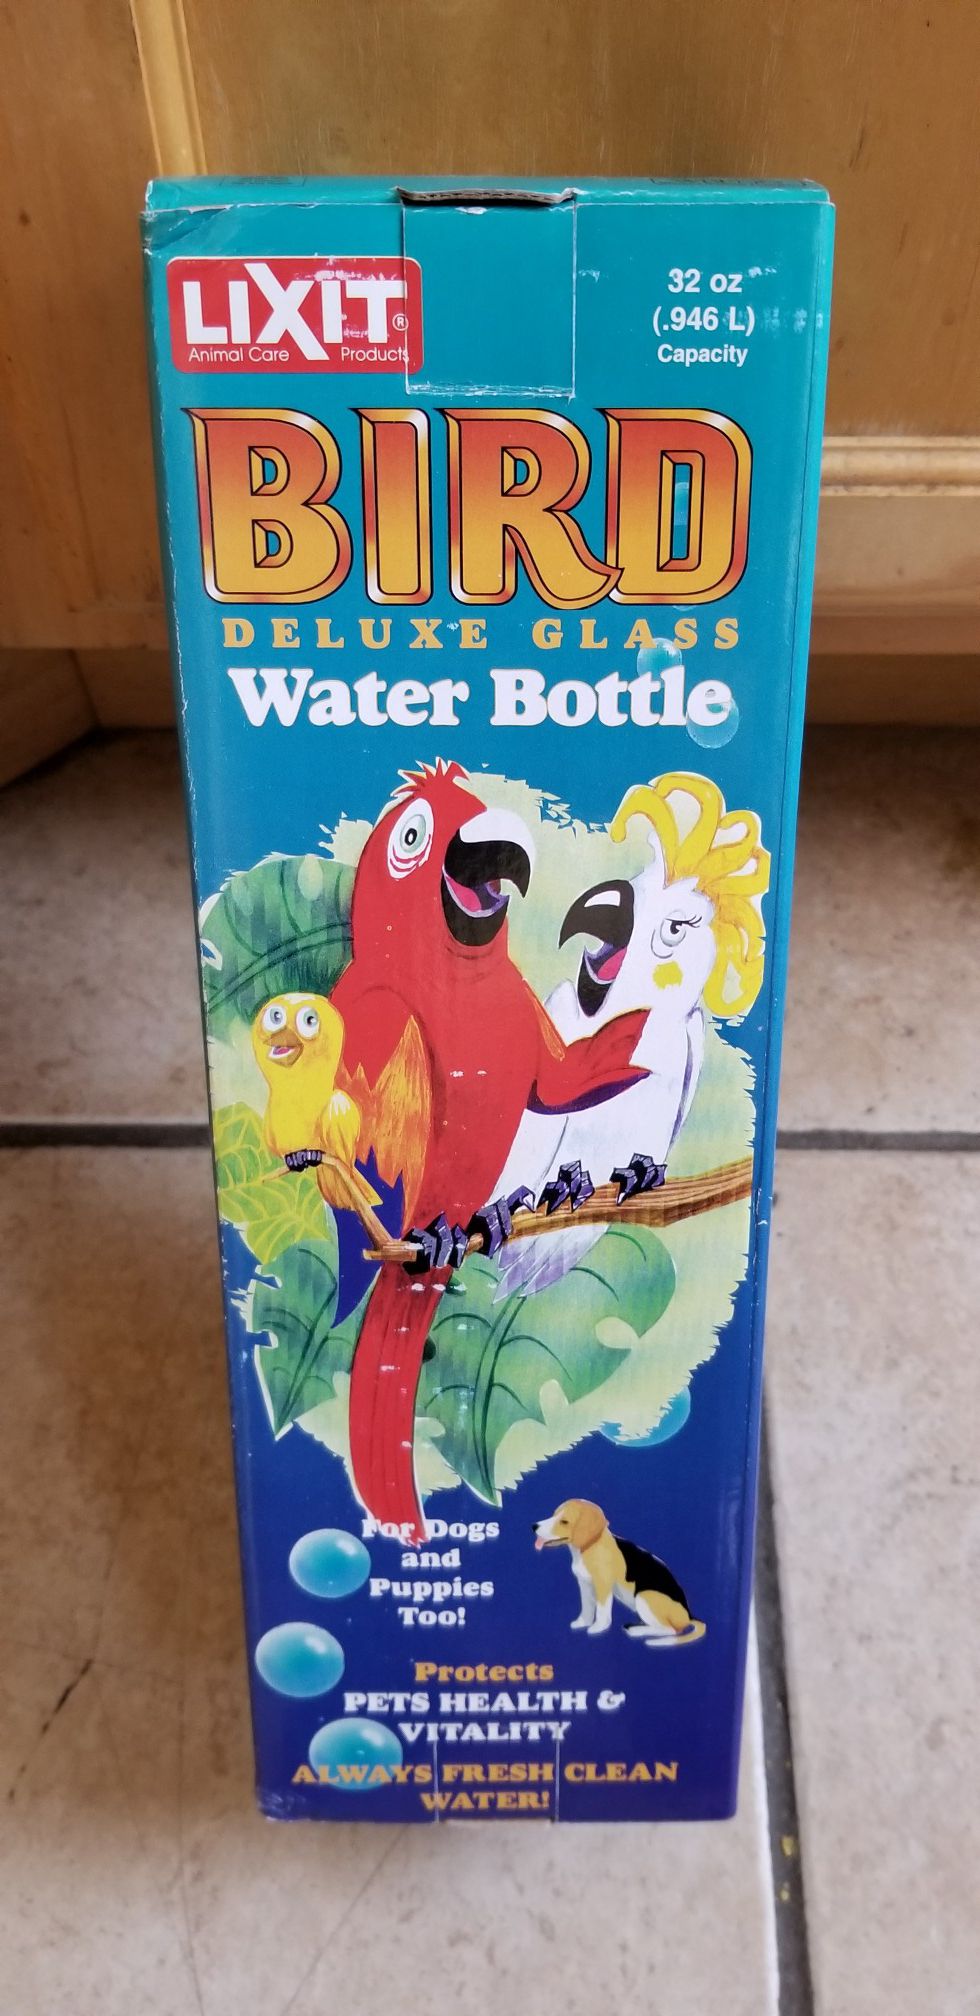 Bird Cage Glass Water Bottle, 32oz *NEW*: Lixit An